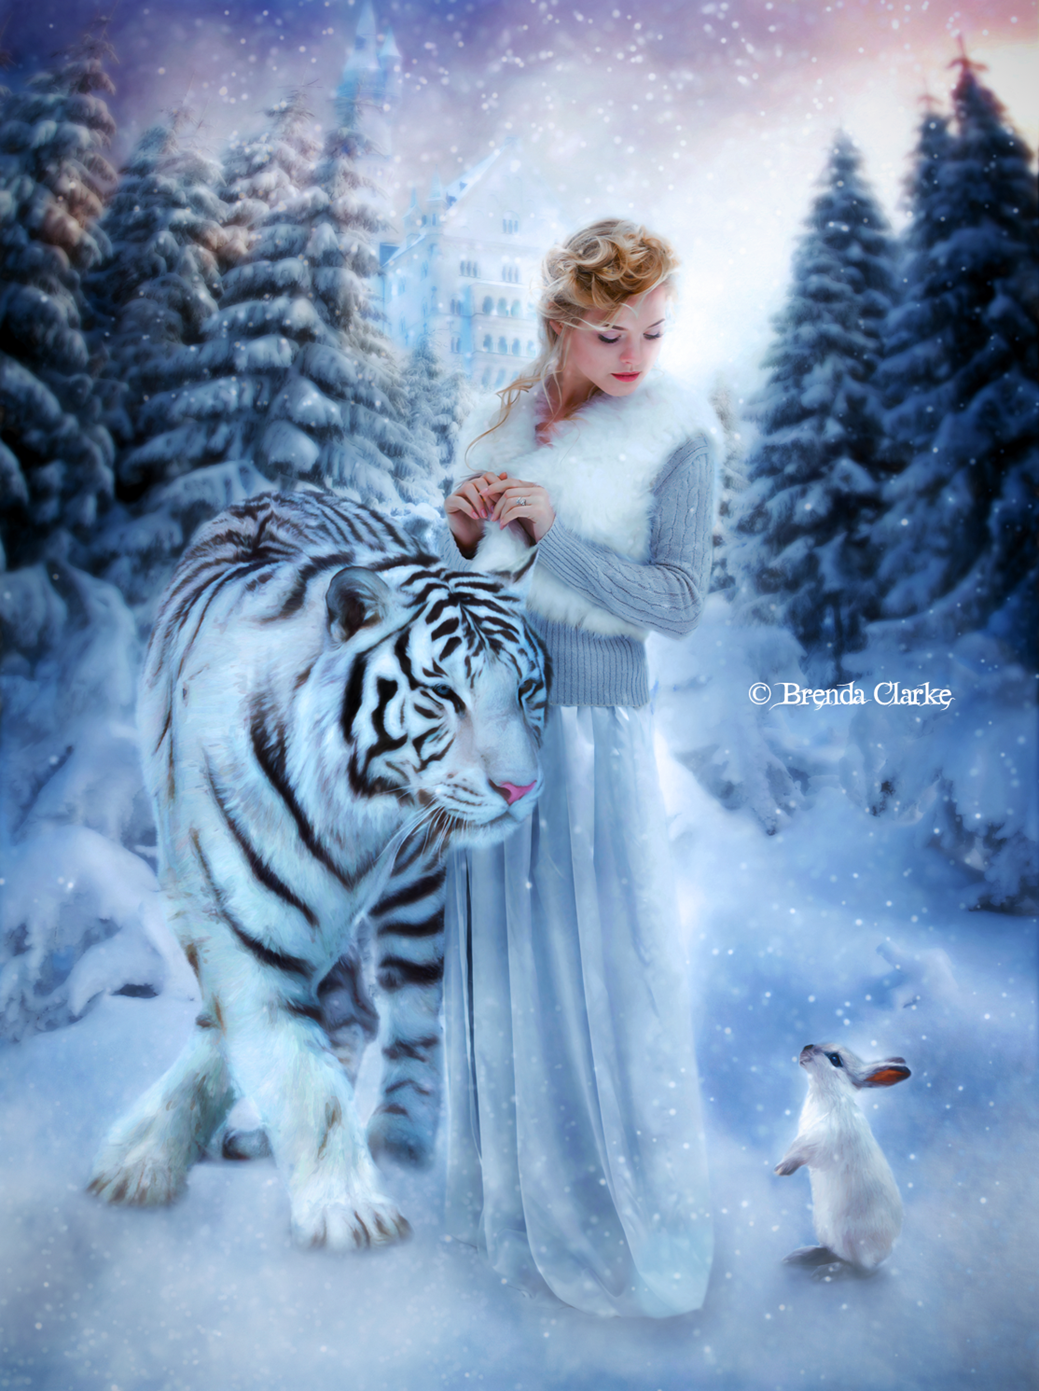 The White Queen Cat rabbit wonderland alice cheshire cat white rabbit winter fairytale story